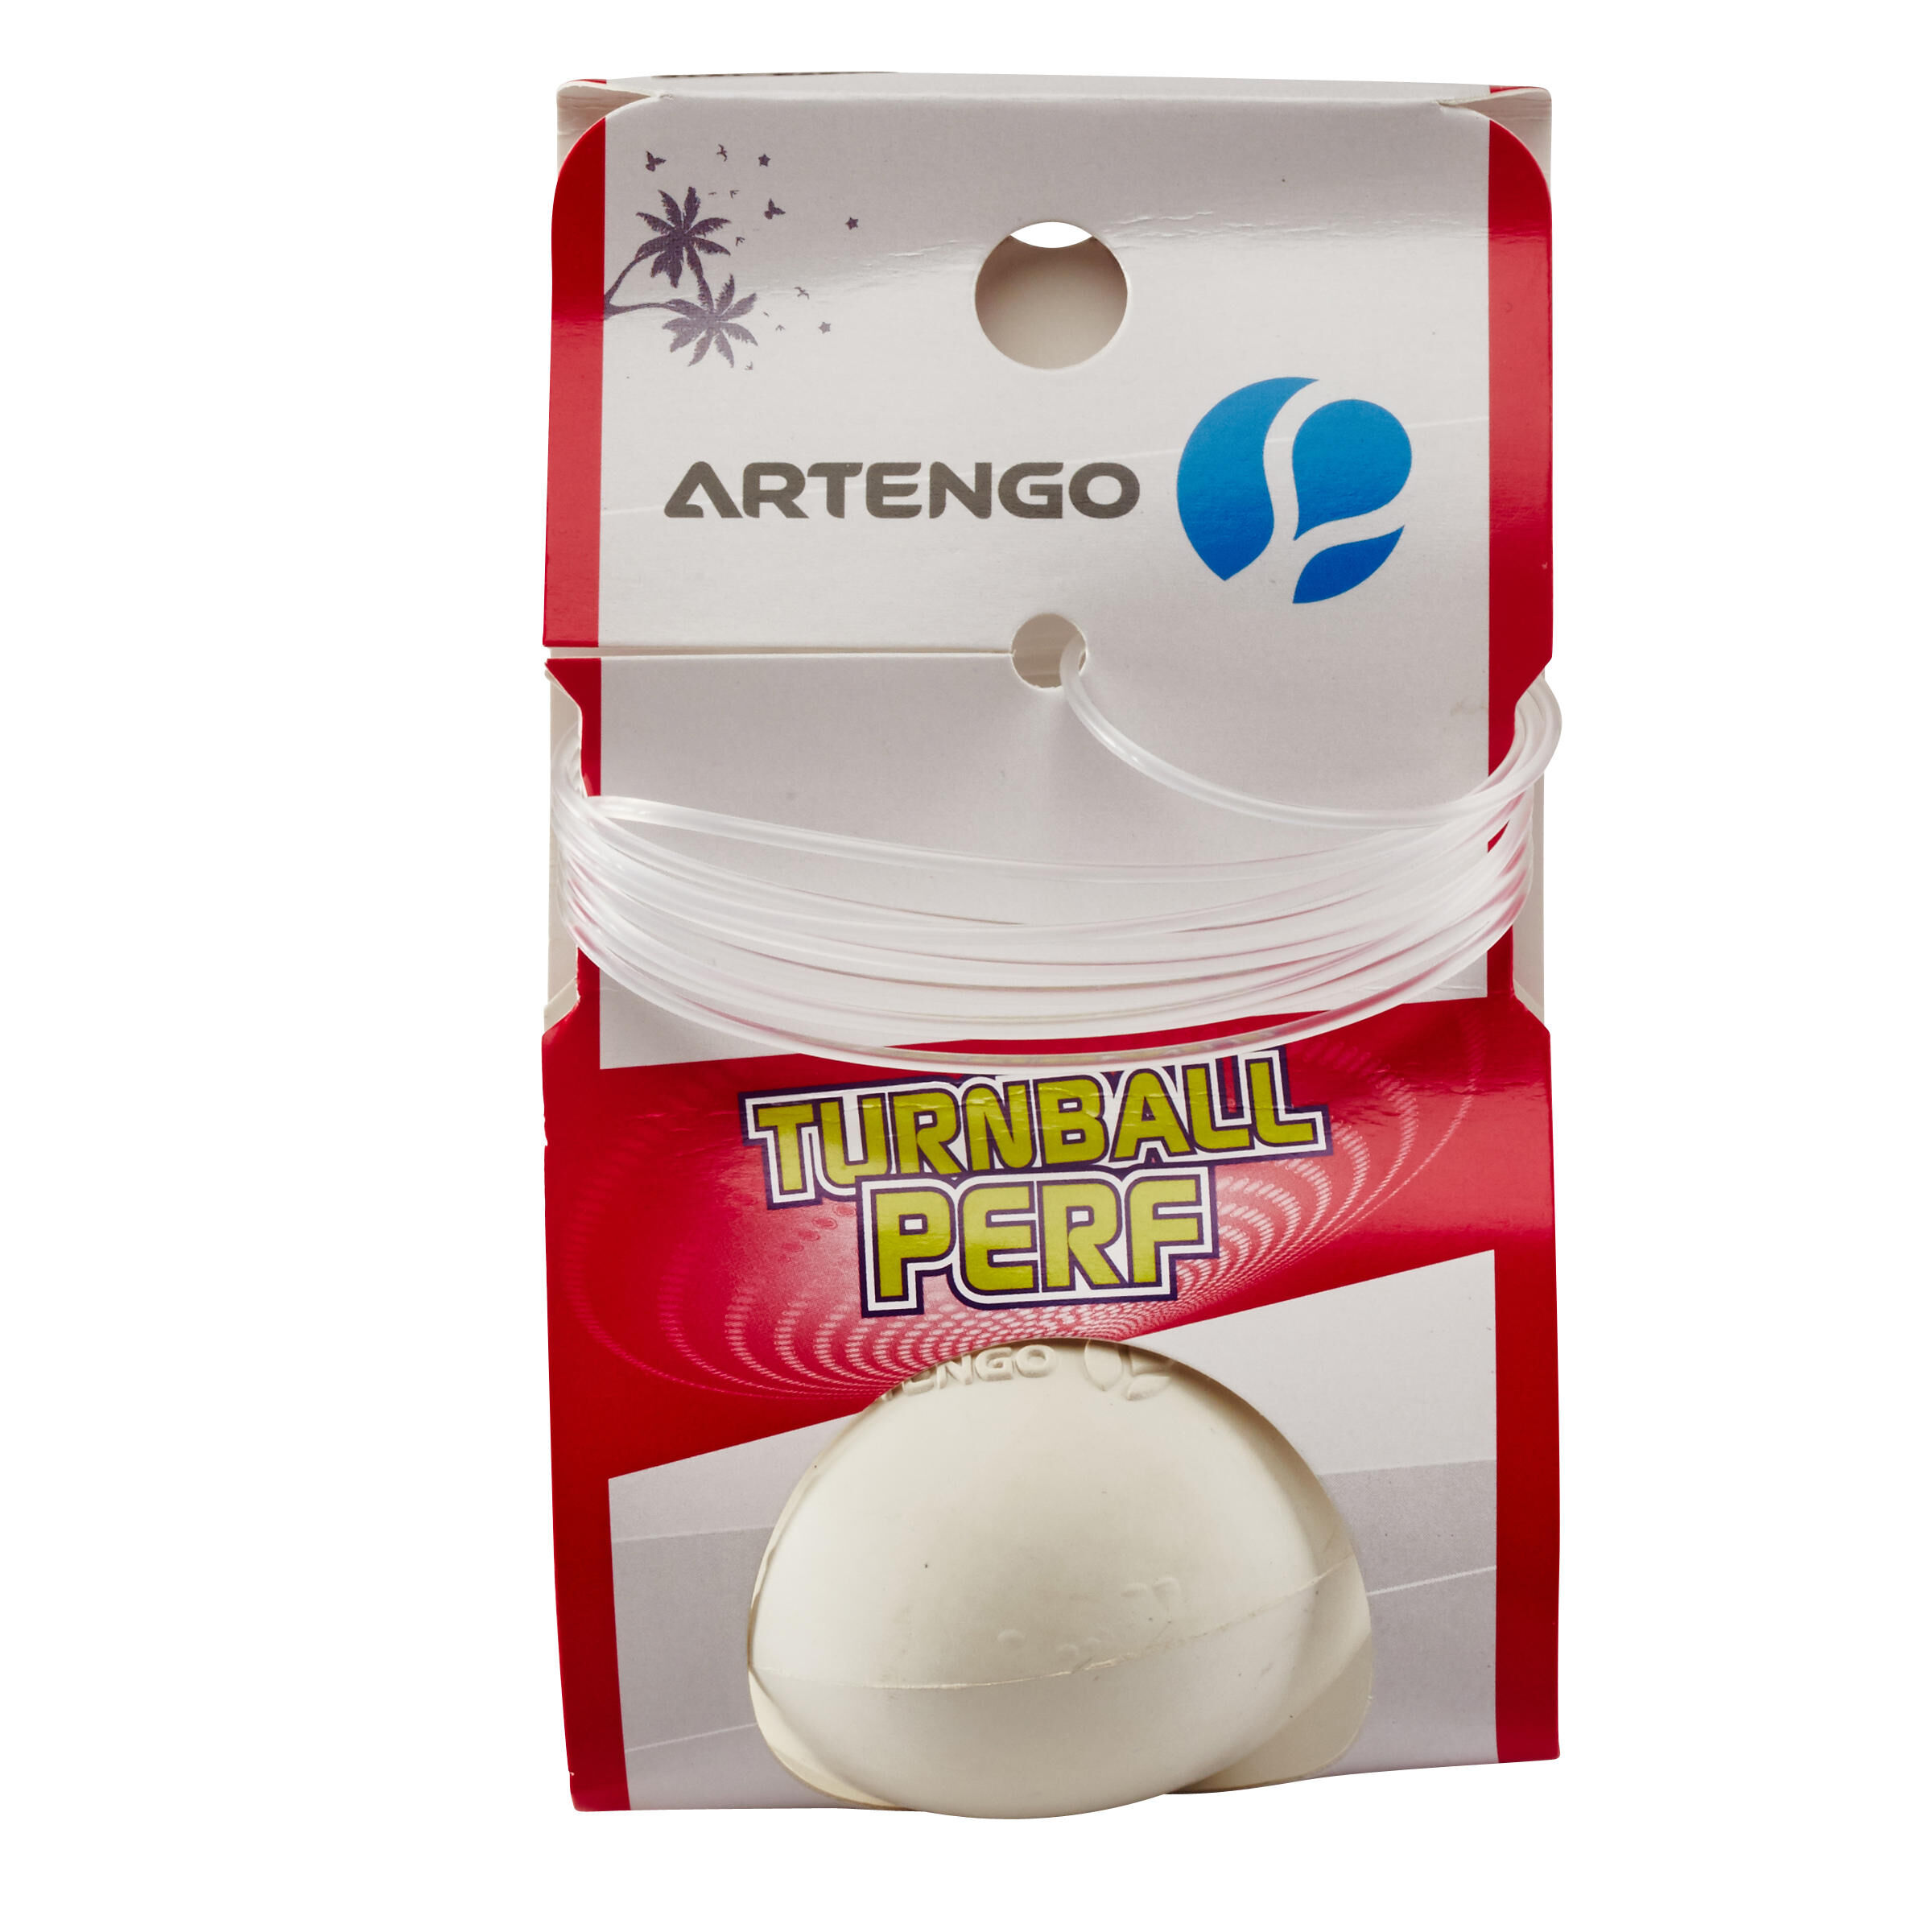 ARTENGO Turnball Perf Speedball Ball - White Rubber